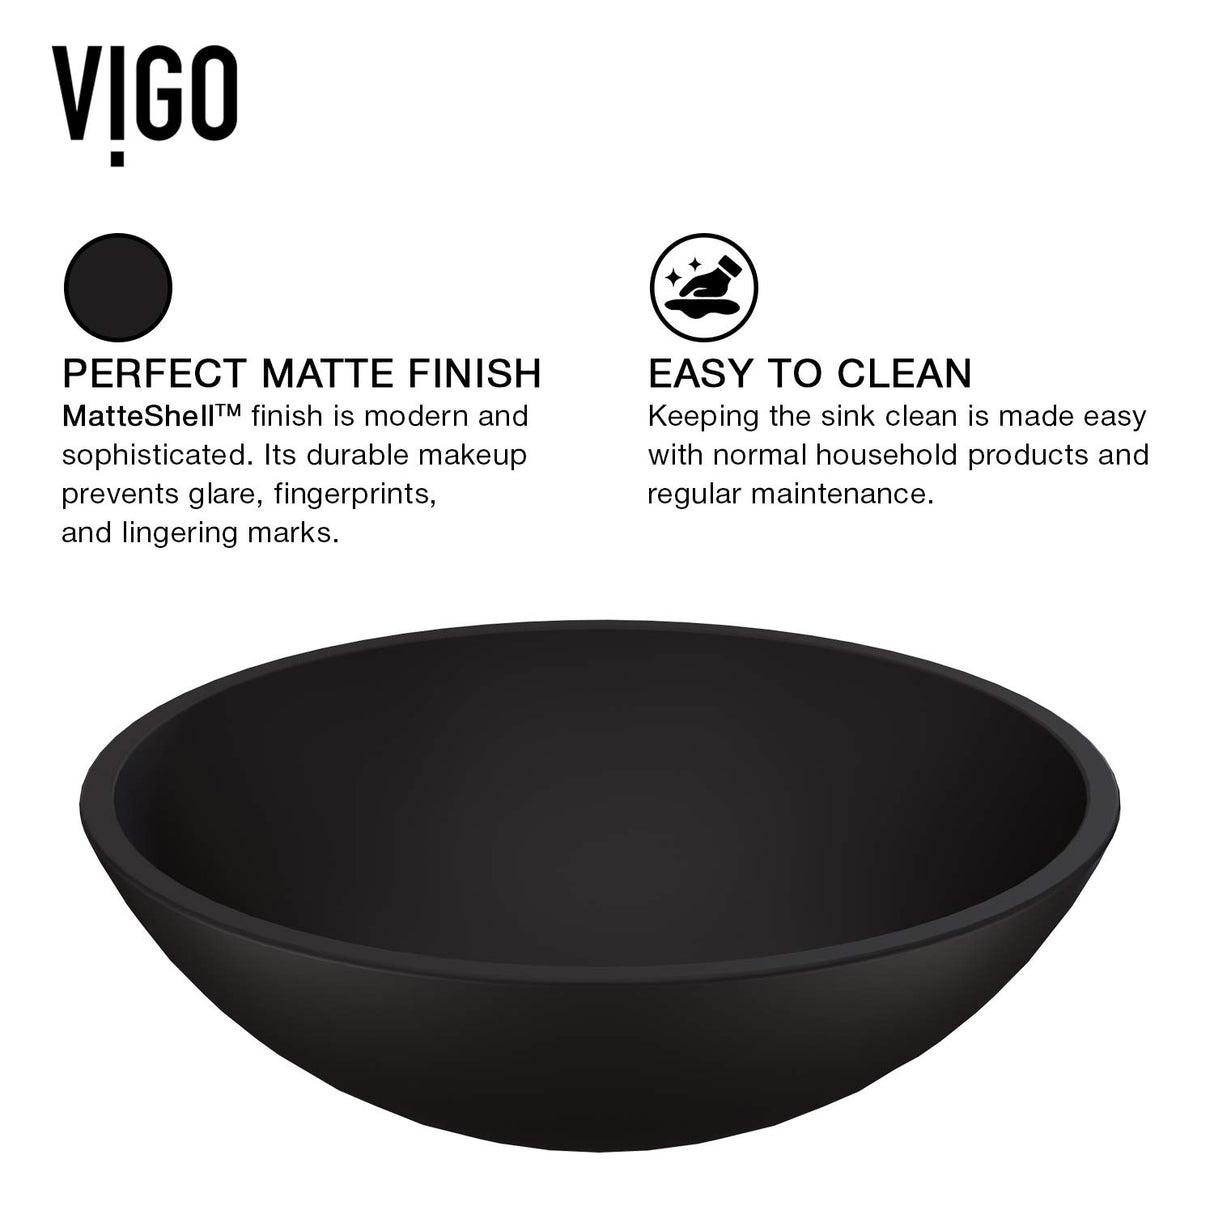 VIGO Cavalli 15 inch Diameter Over the Counter Freestanding MatteShellTM Round Vessel Bathroom Sink in Black - Sink for Bathroom VG07111